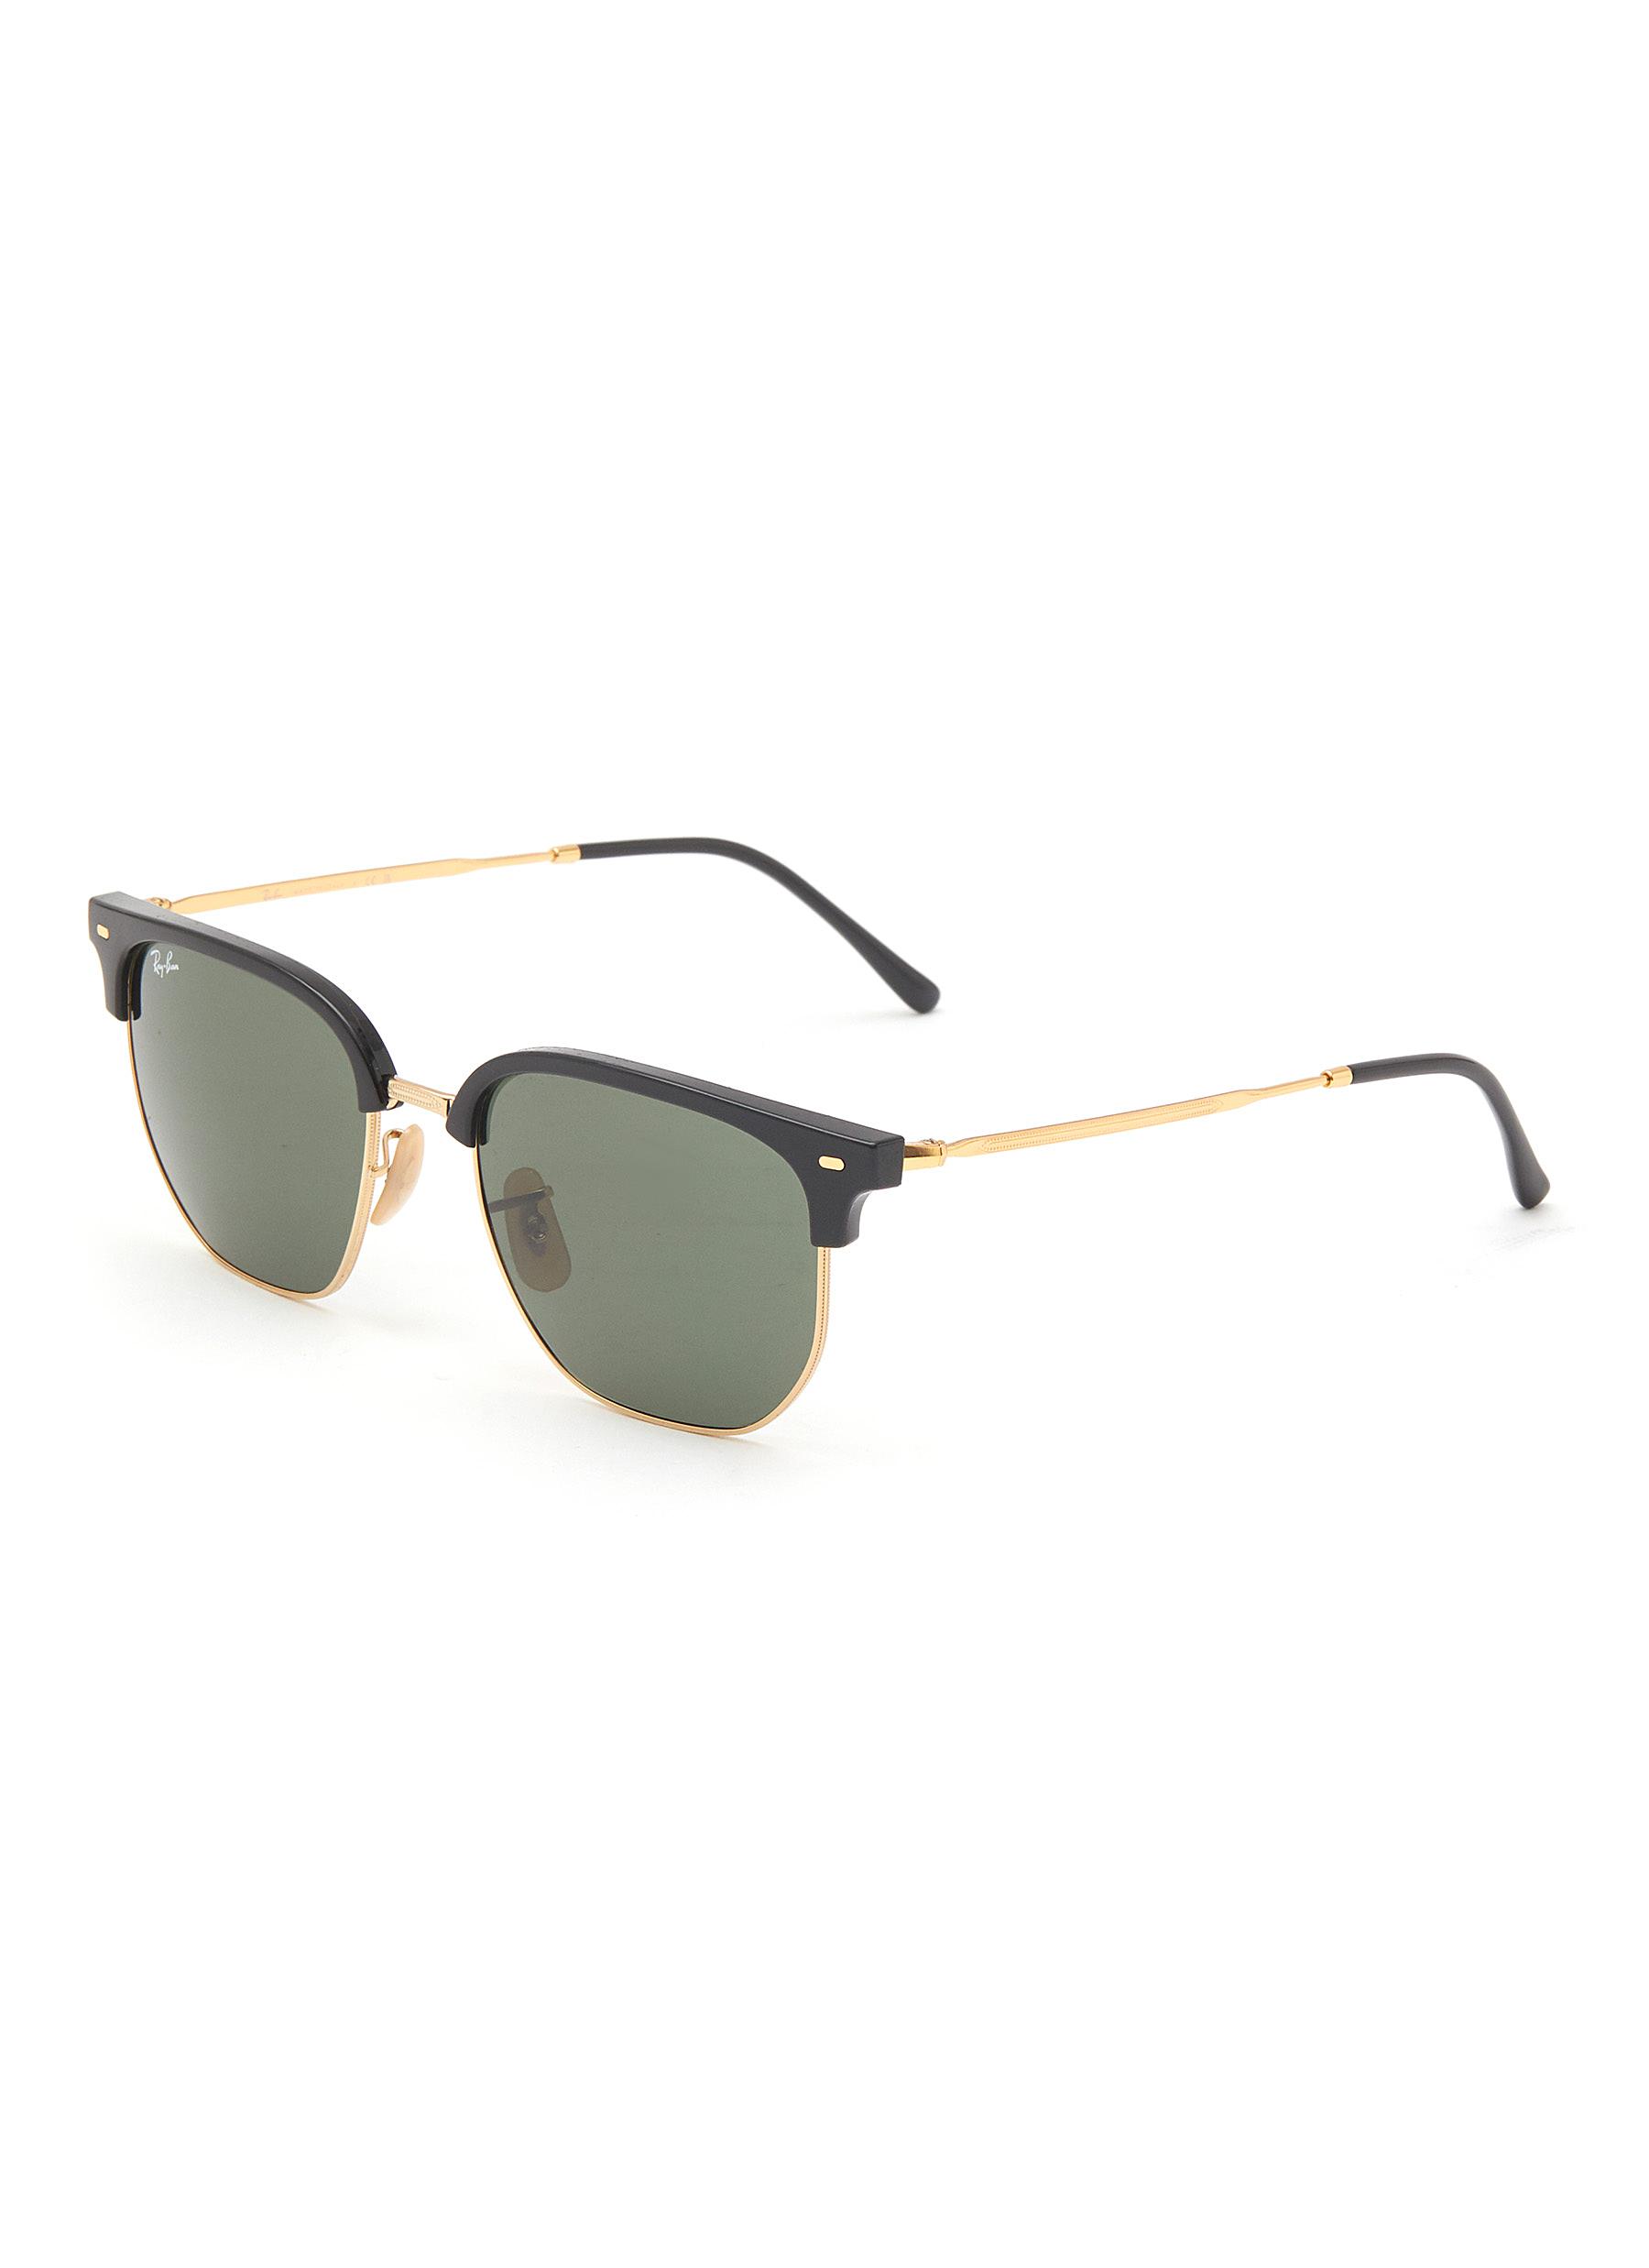 RAY-BAN ‘Clubmaster' Green Lens Metal Sunglasses